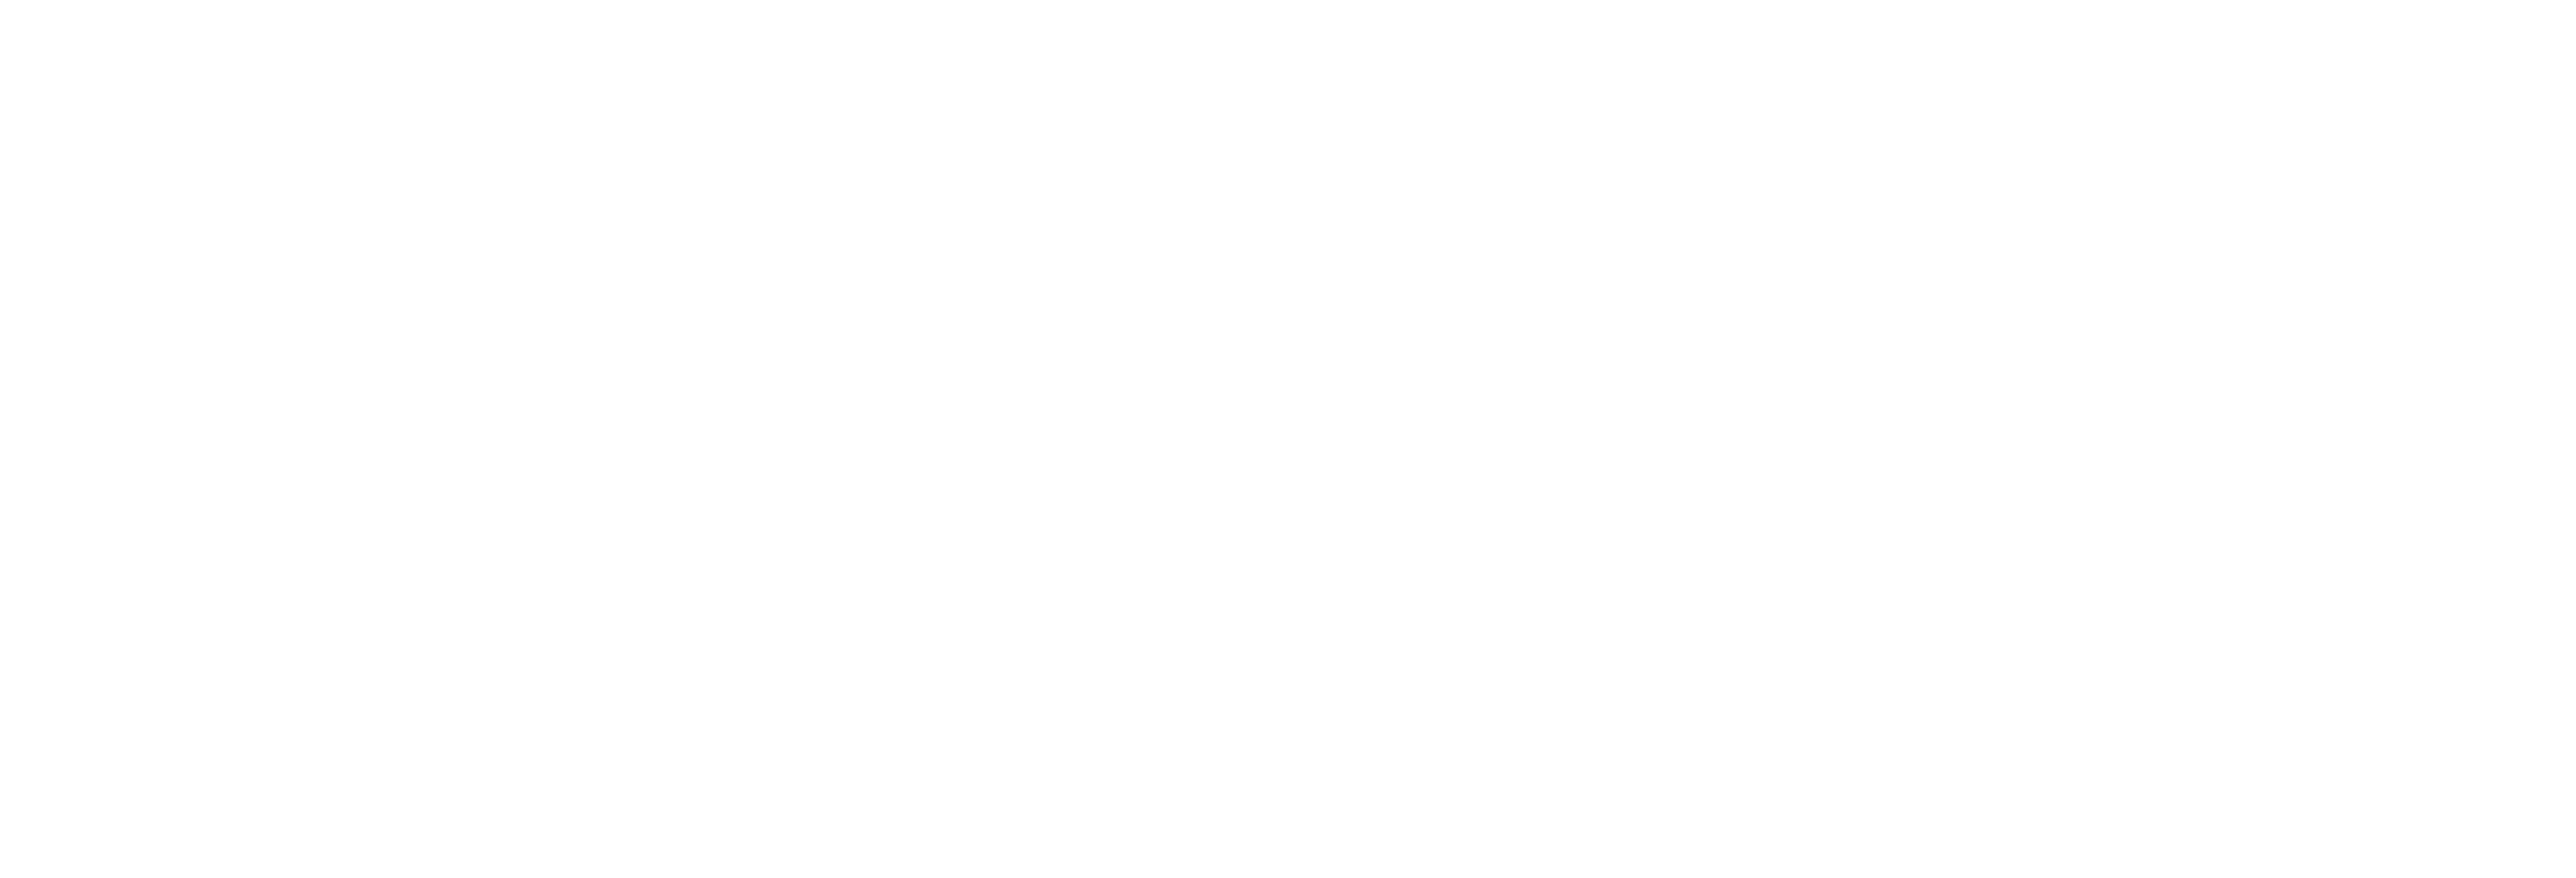 High Scardus Ultra